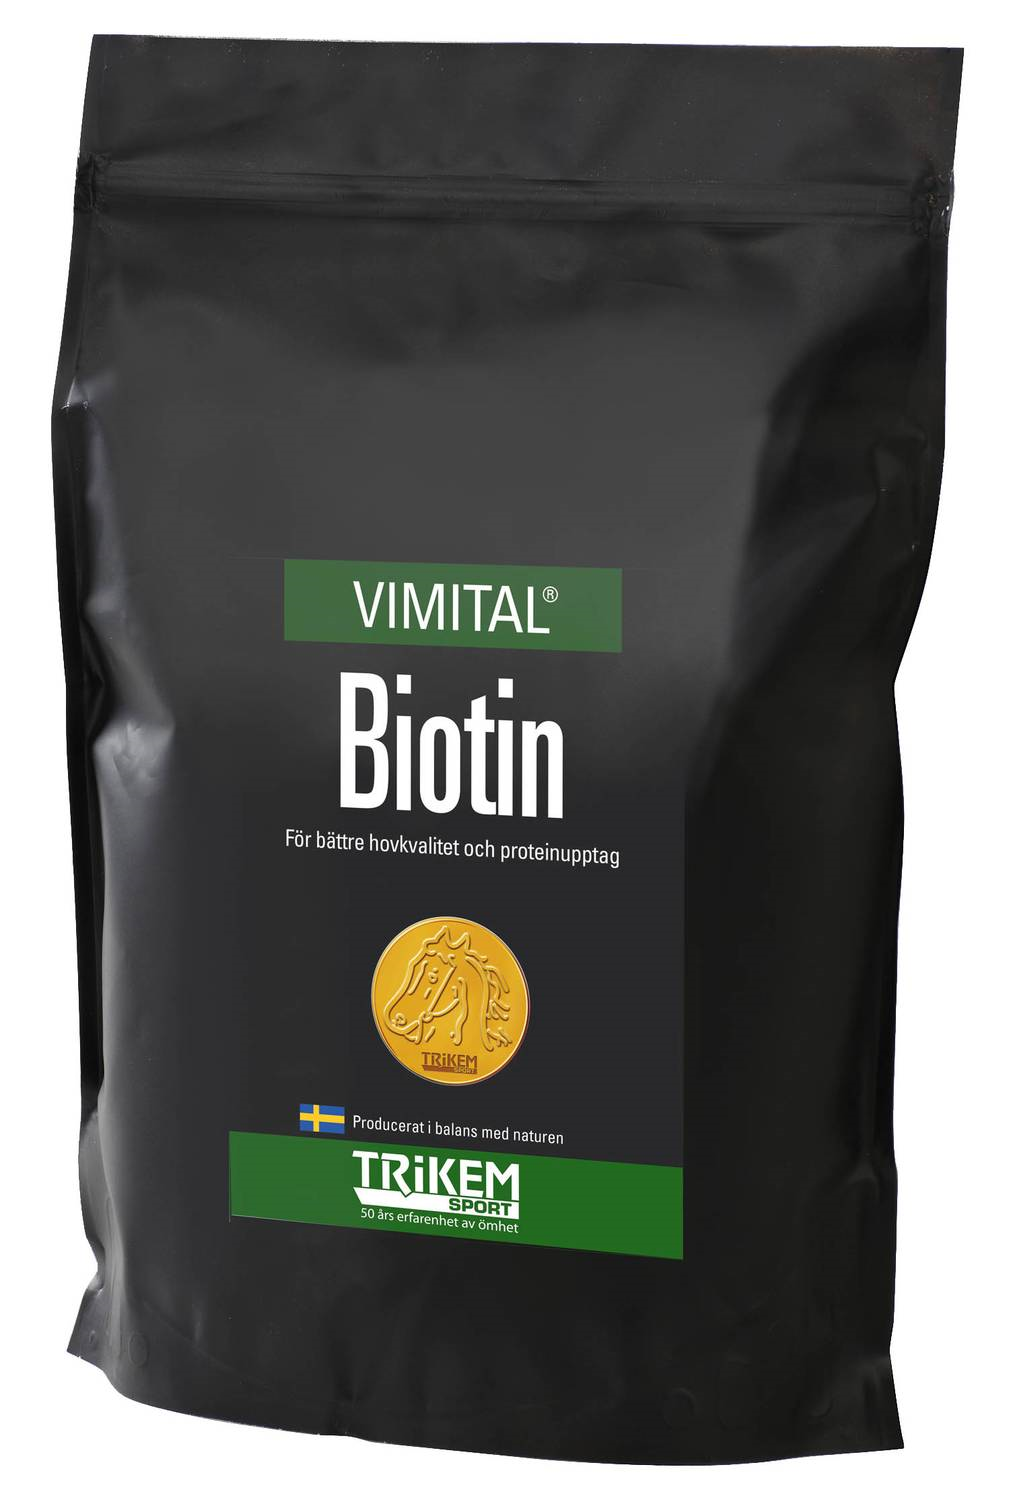 Vimital Biotin